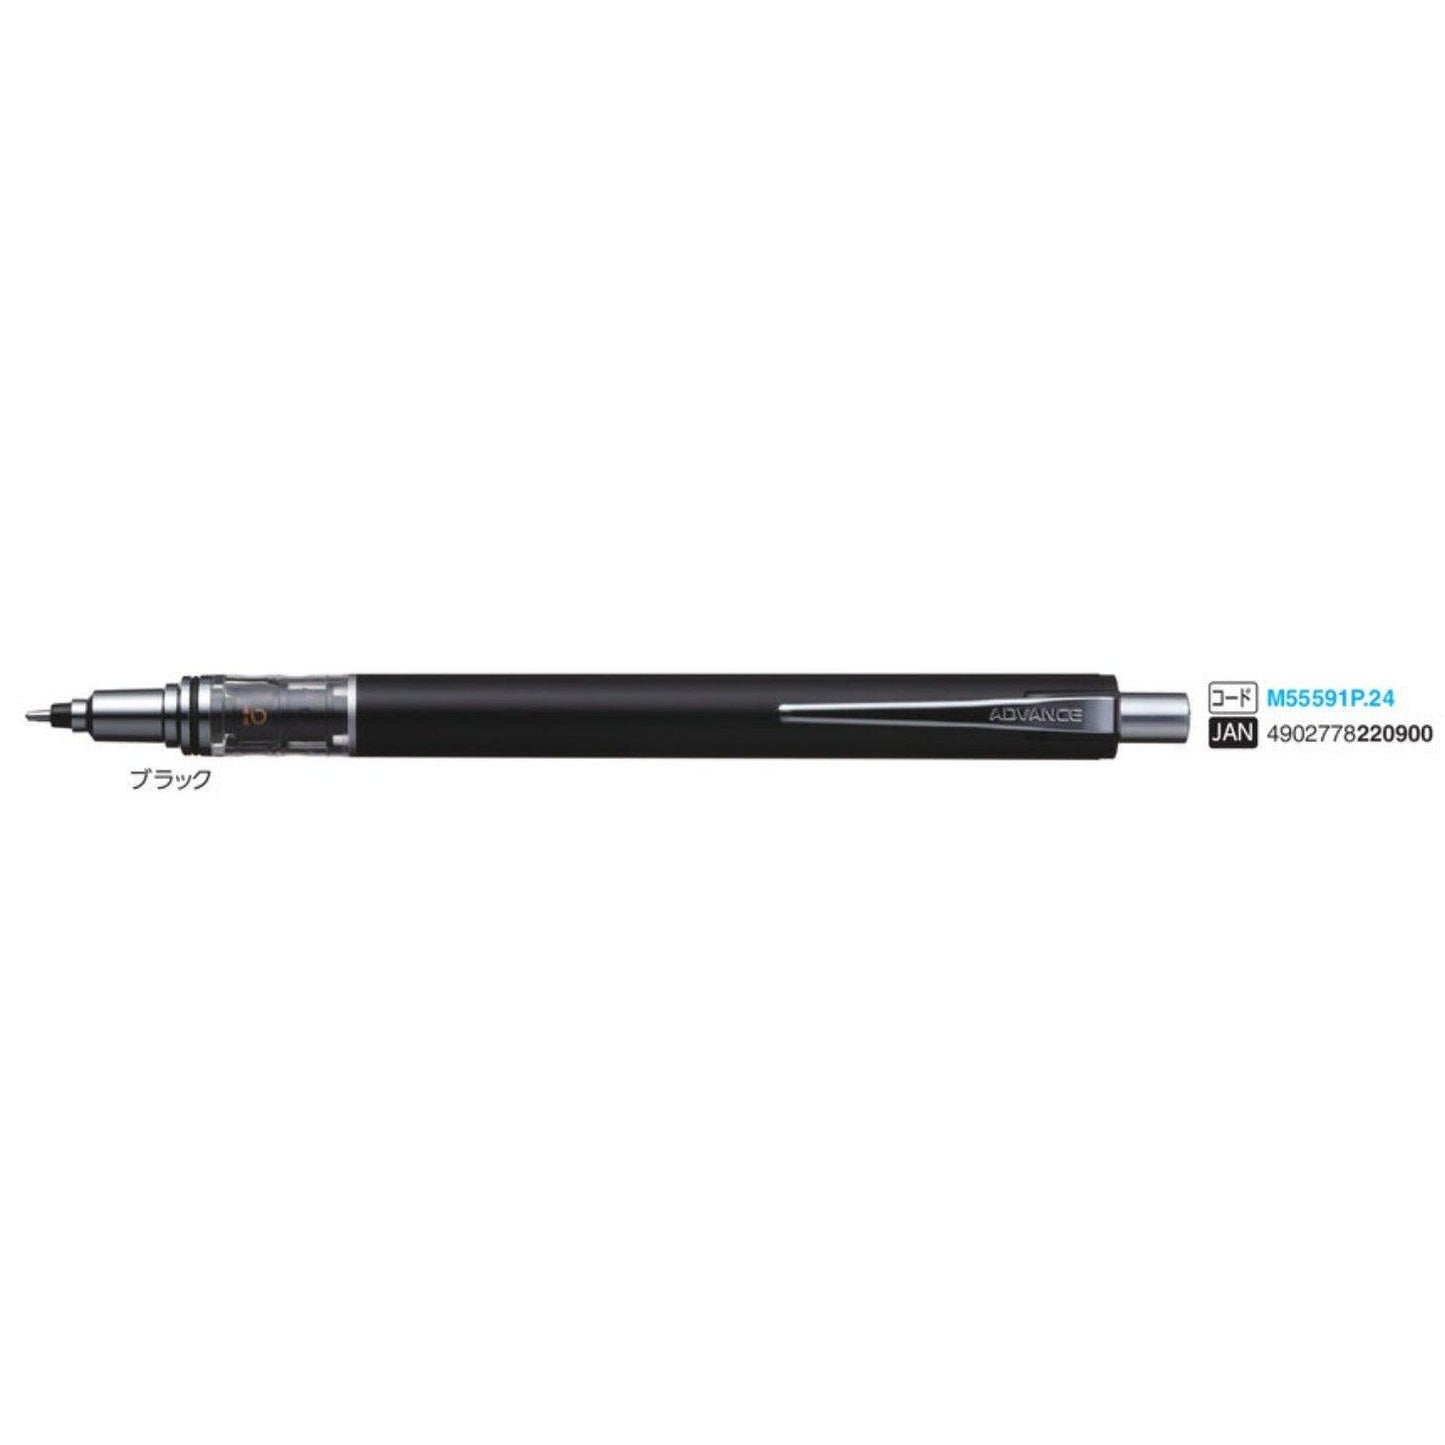 (Pre-Order) UNI KURU TOGA ADVANCE 0.3mm/0.5mm/0.7mm mechanical pencil, M3-559, M7-559, M5-559 - CHL-STORE 